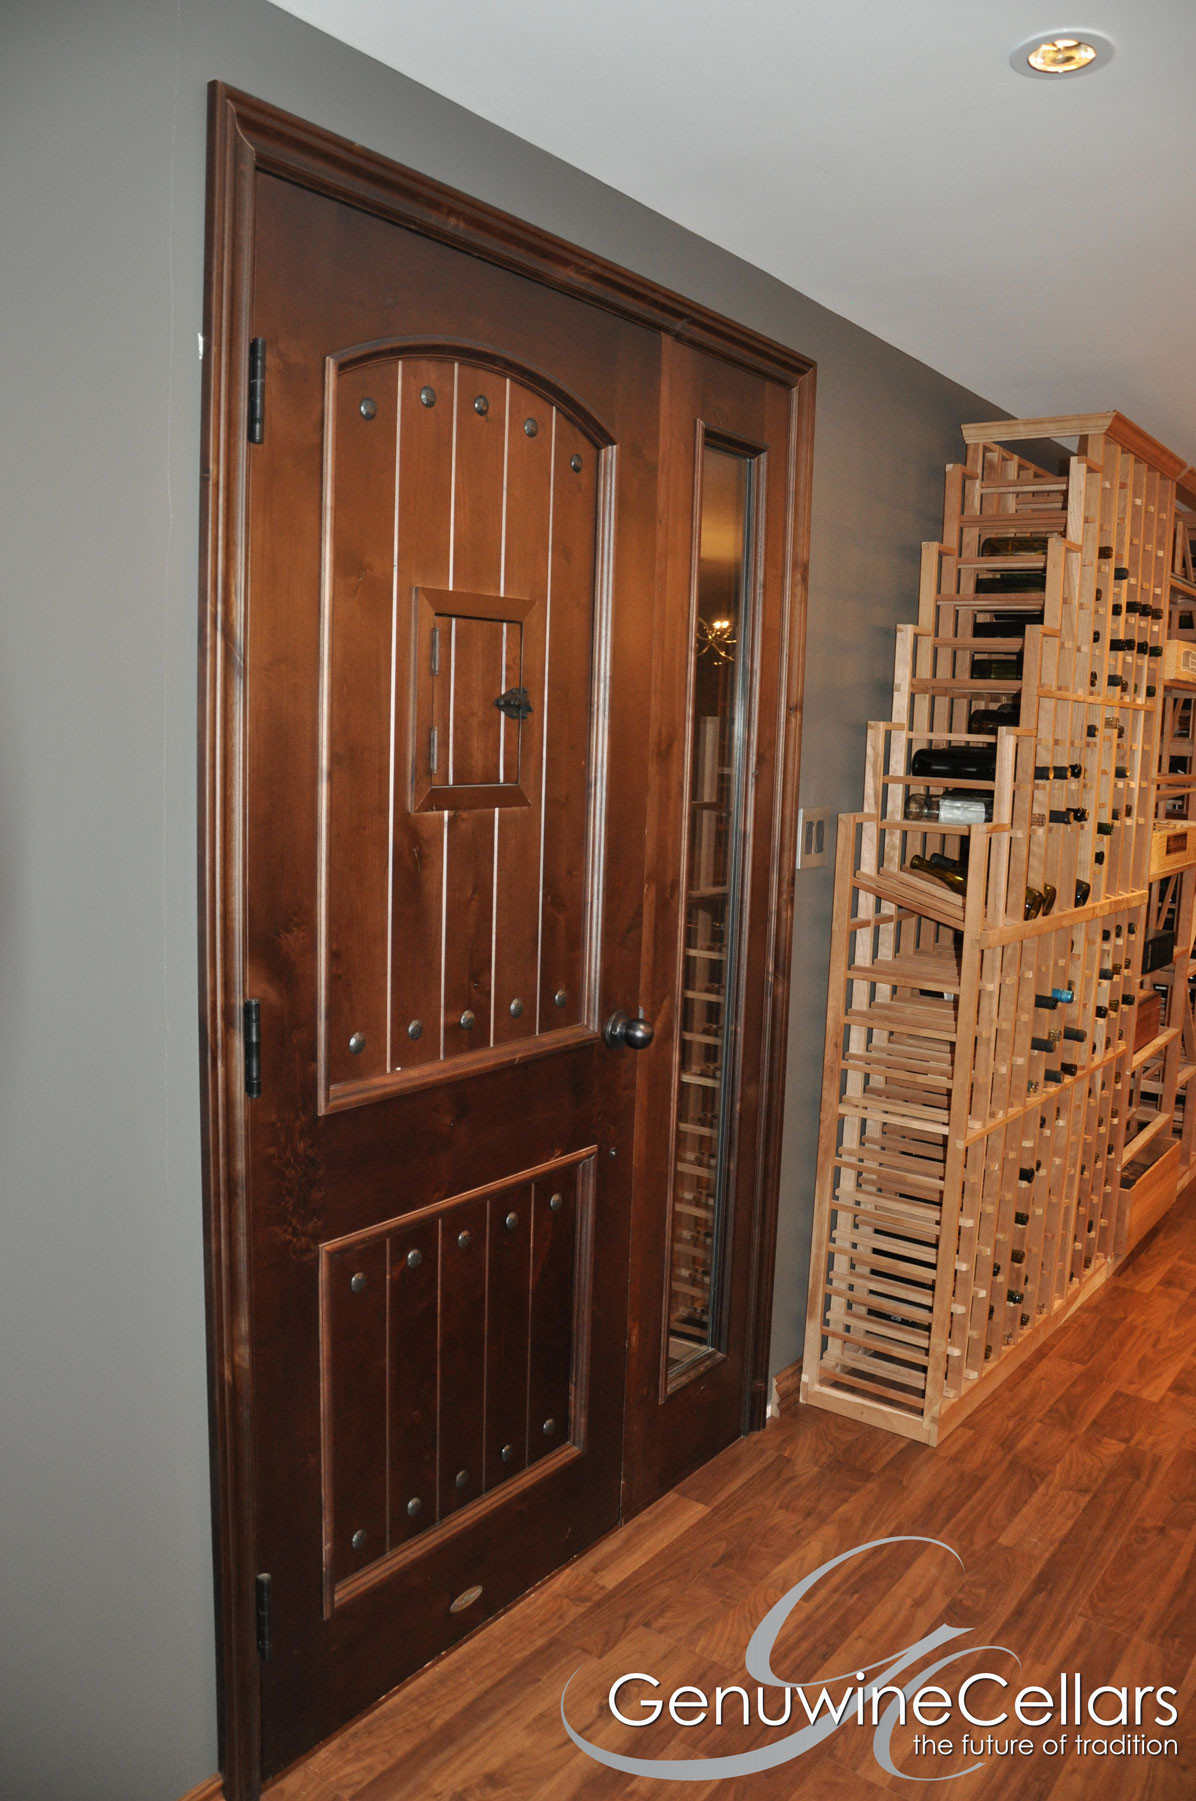 Best ideas about Wine Cellar Door
. Save or Pin Custom Wine Cellar Doors Now.